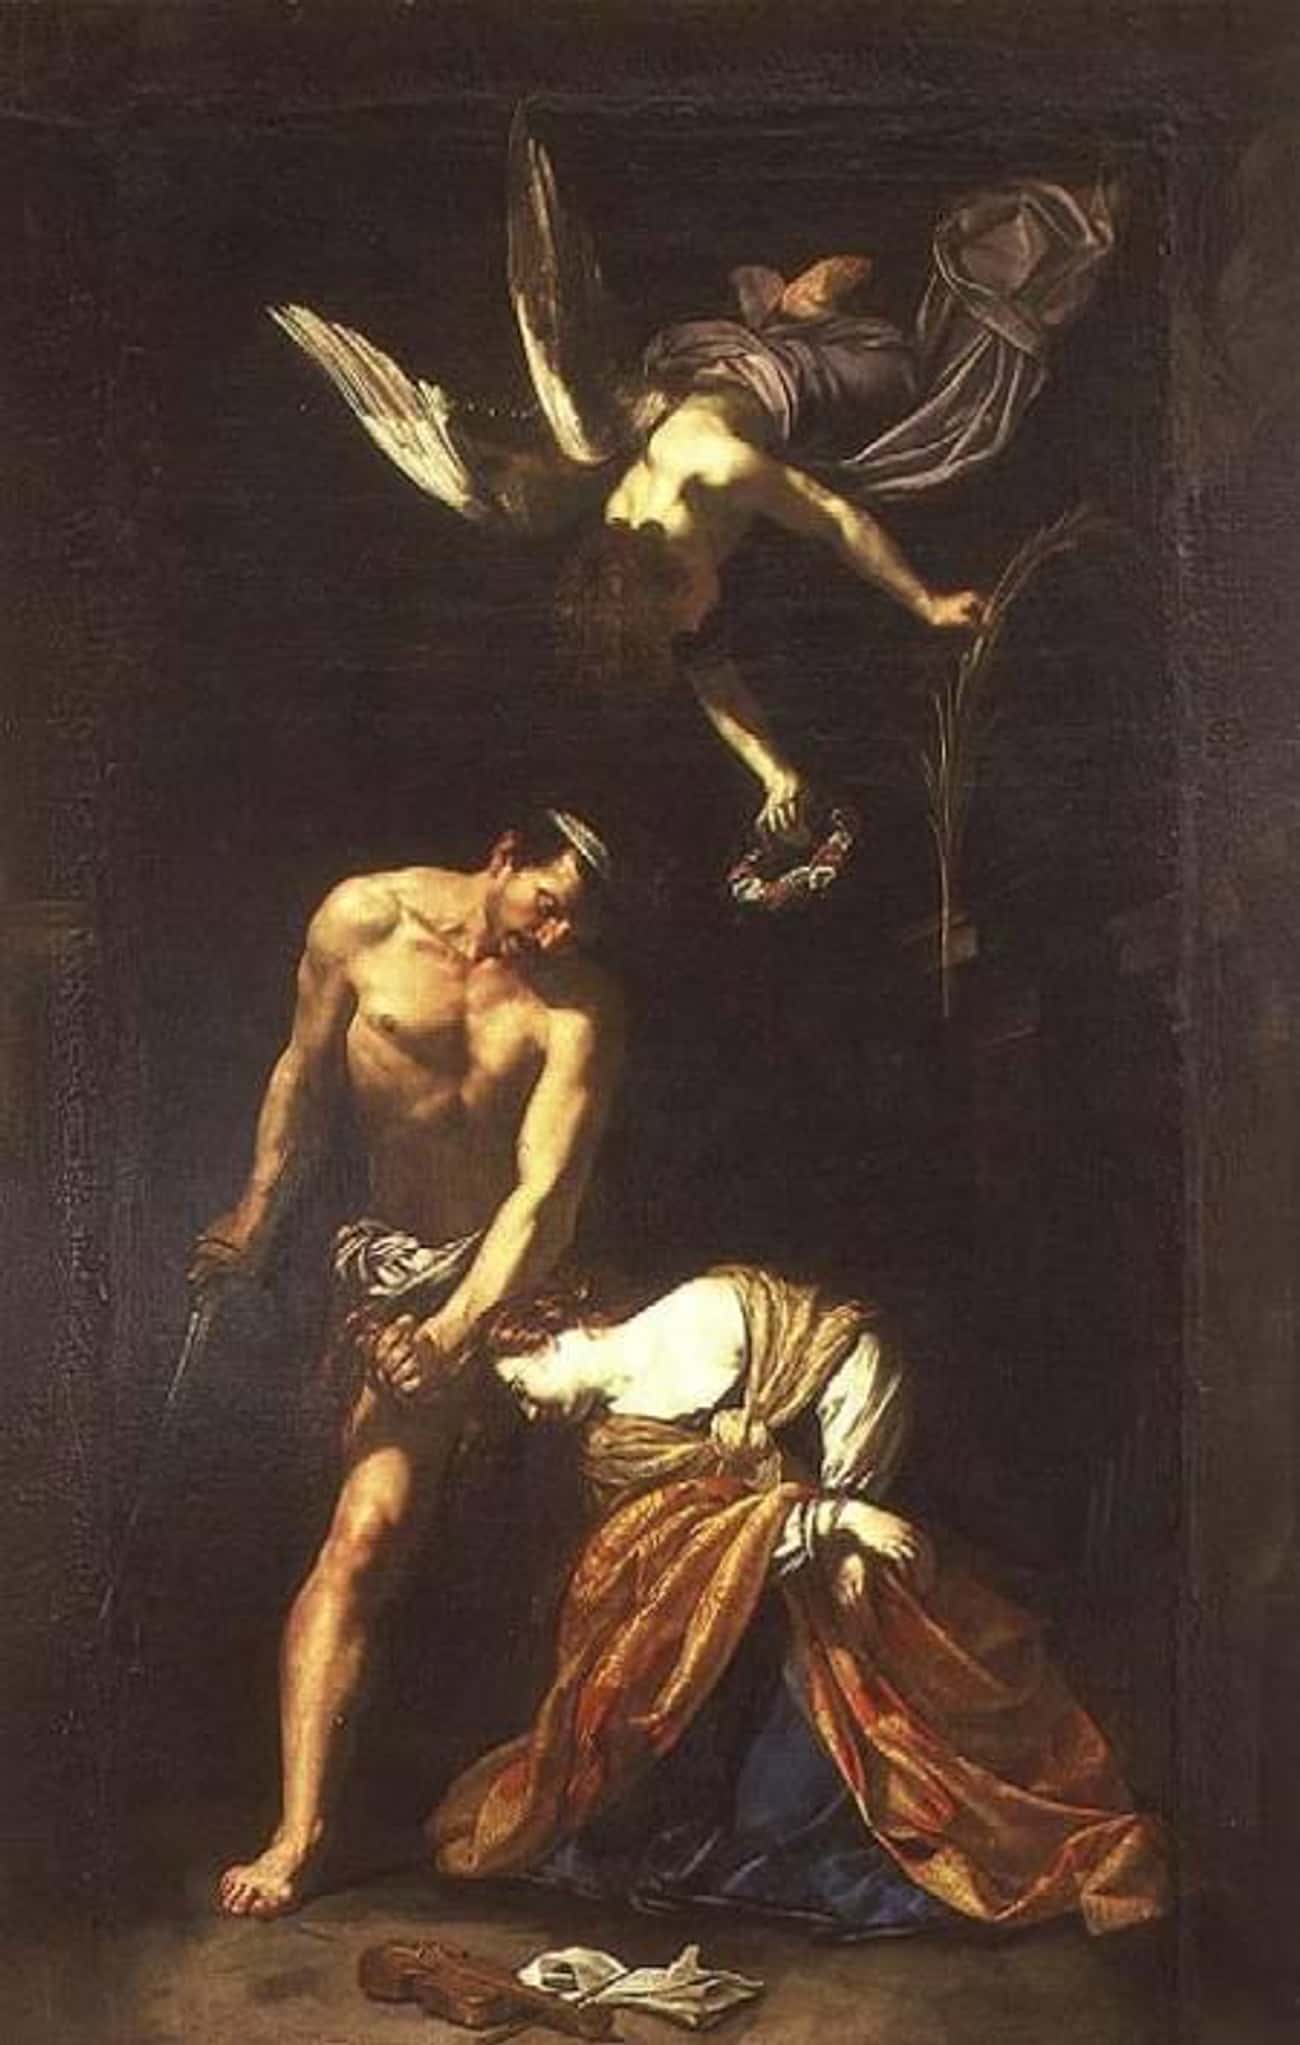 St. Cecilia - A Botched Beheading